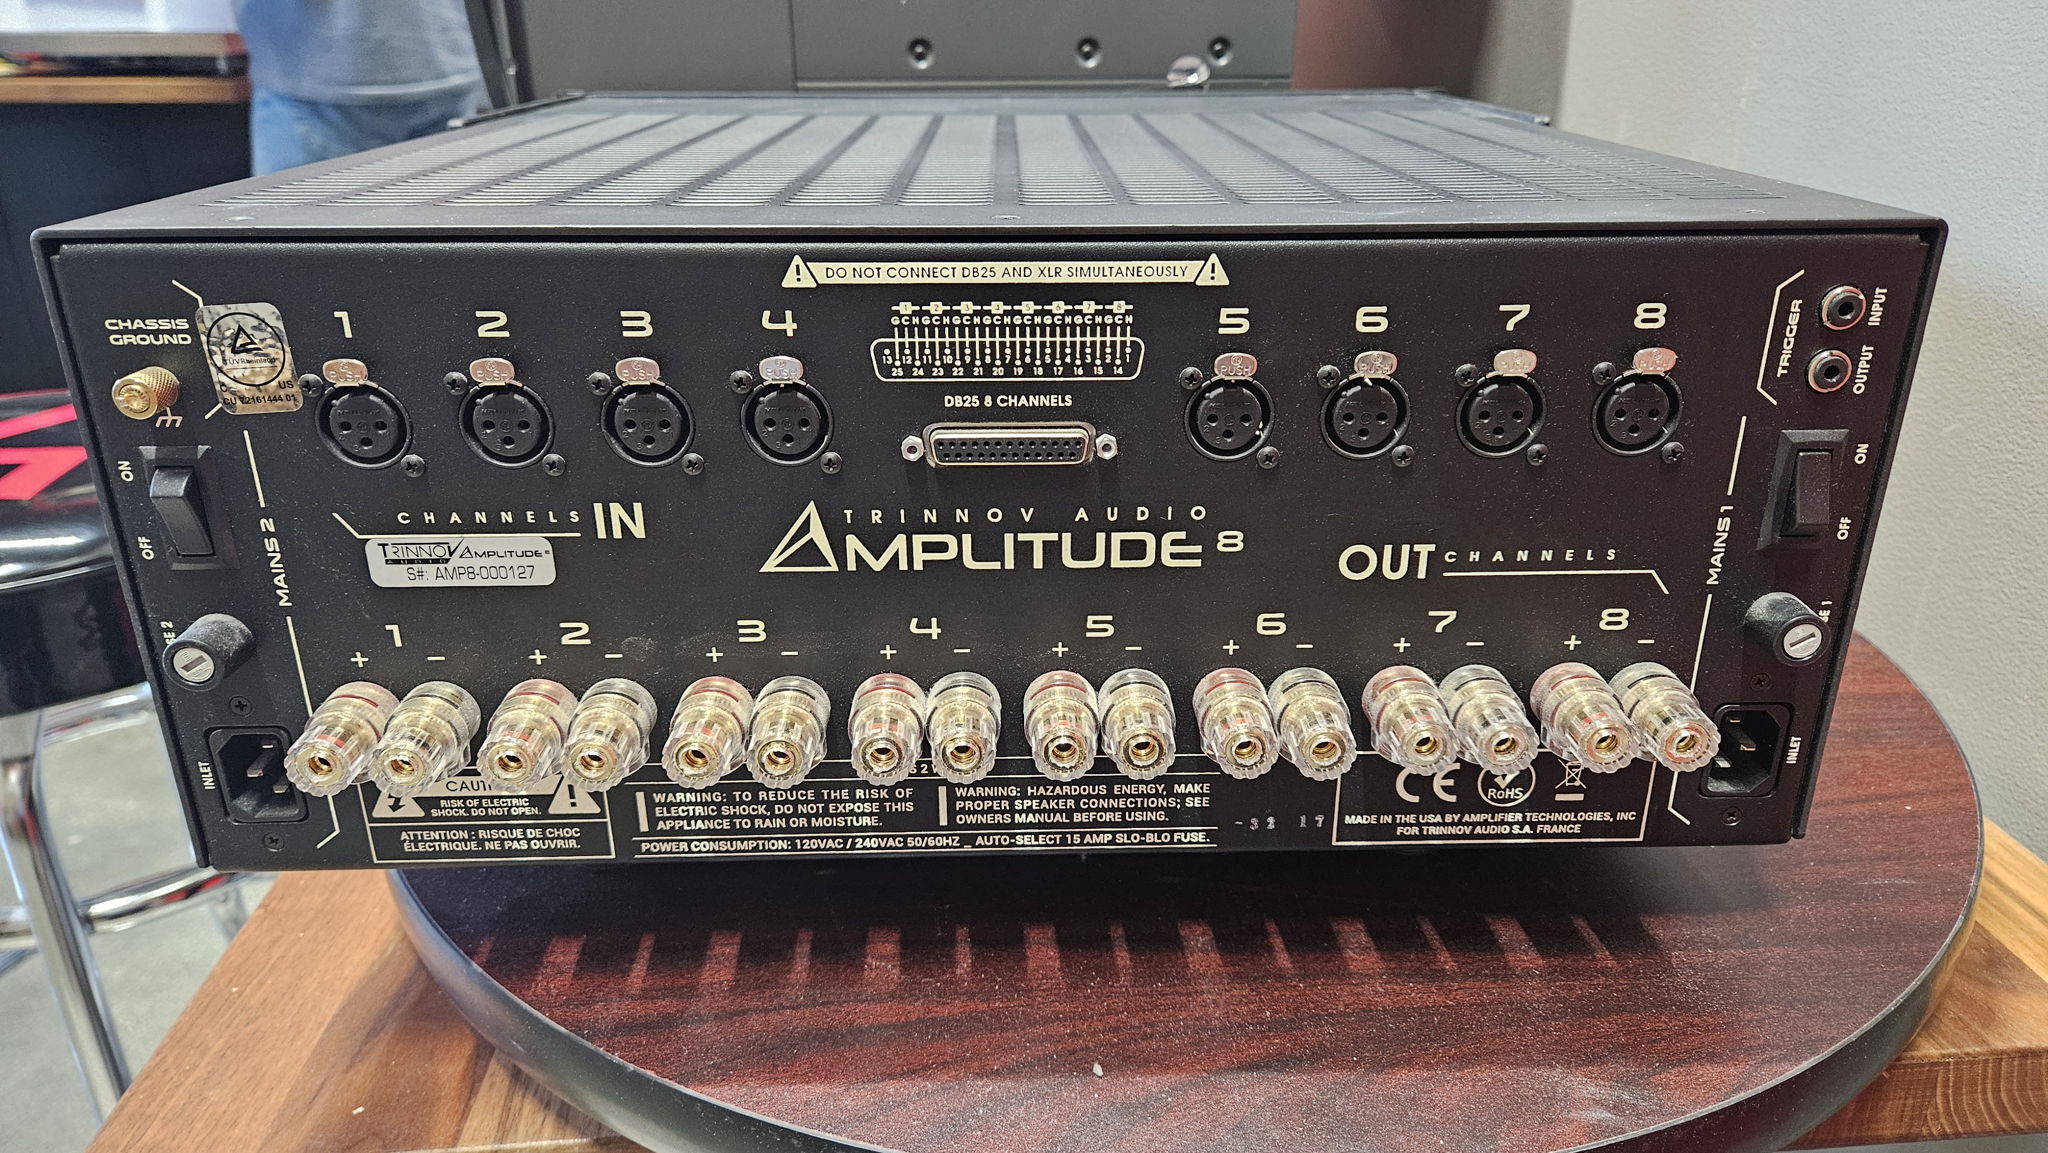 Trinnov Audio Amplitude 8 - Not the M version 4